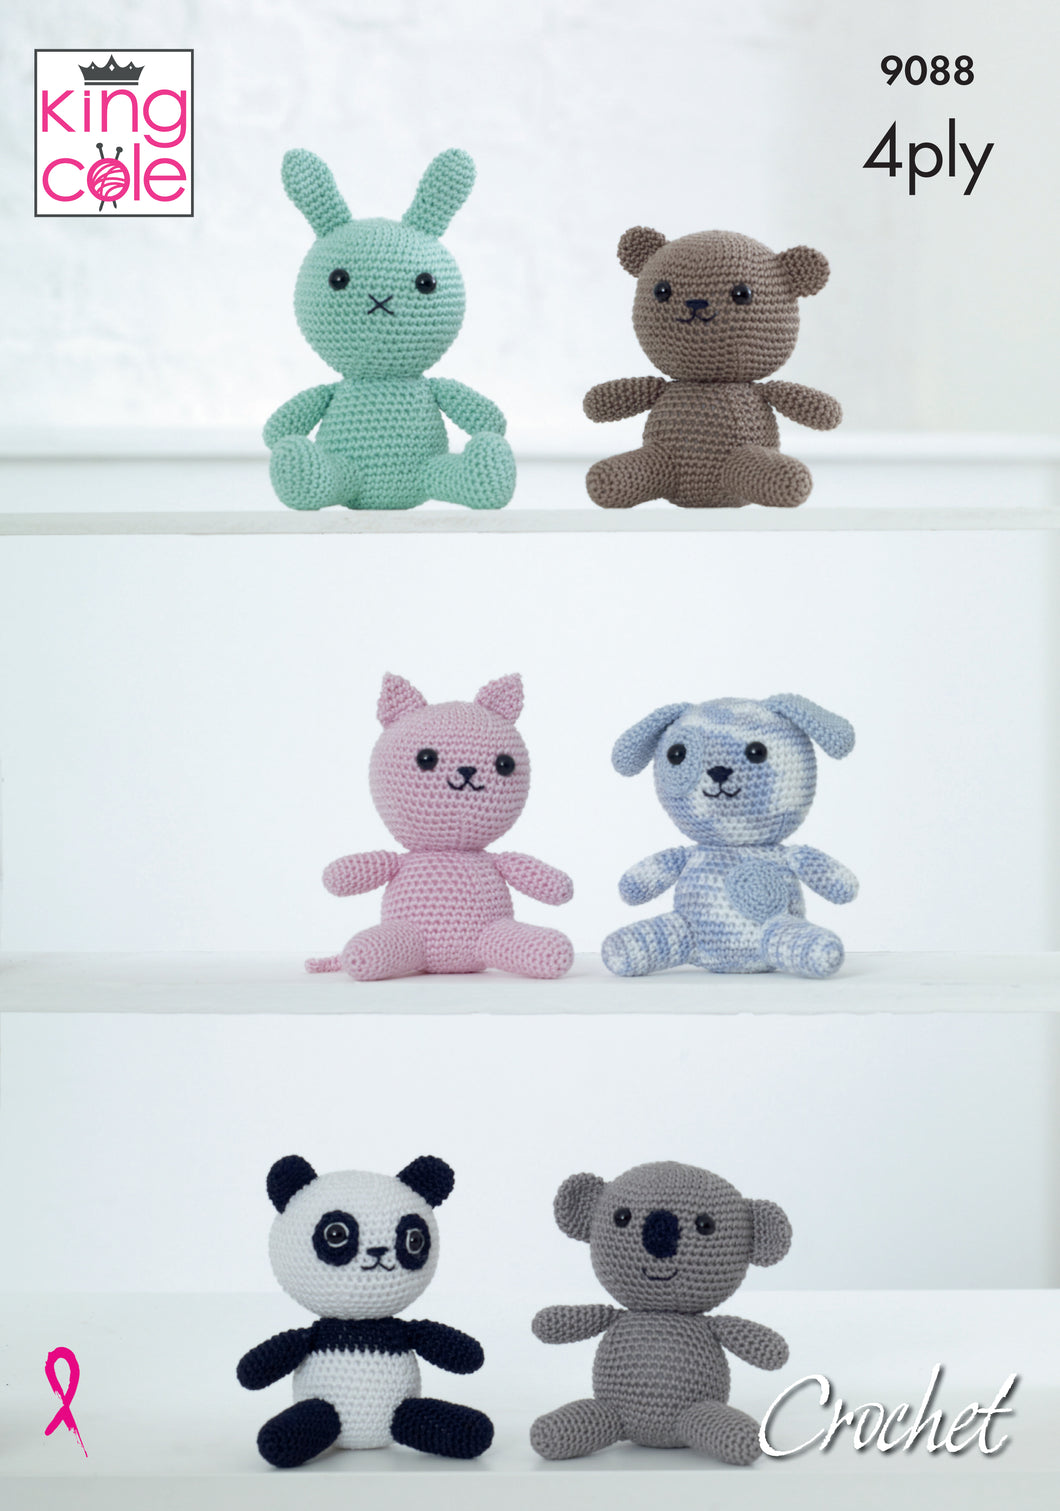 King Cole Pattern 9088: Crochet Amigurumi Animal Toys